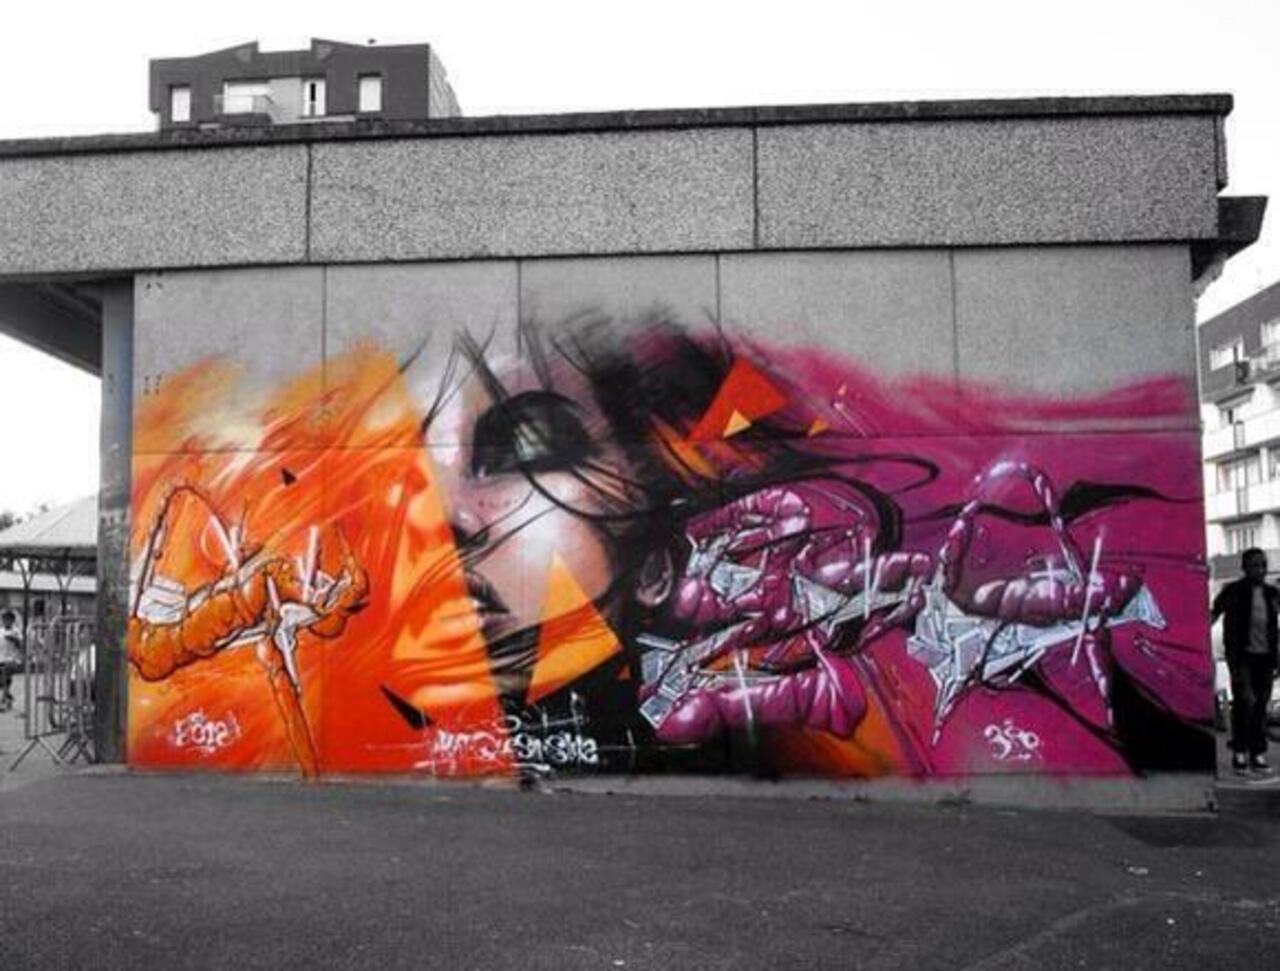 Colab of Sly2, Kat, Quesa Street Art wall in Paris, France #art #mural #graffiti #streetart http://t.co/mrlABtowrA